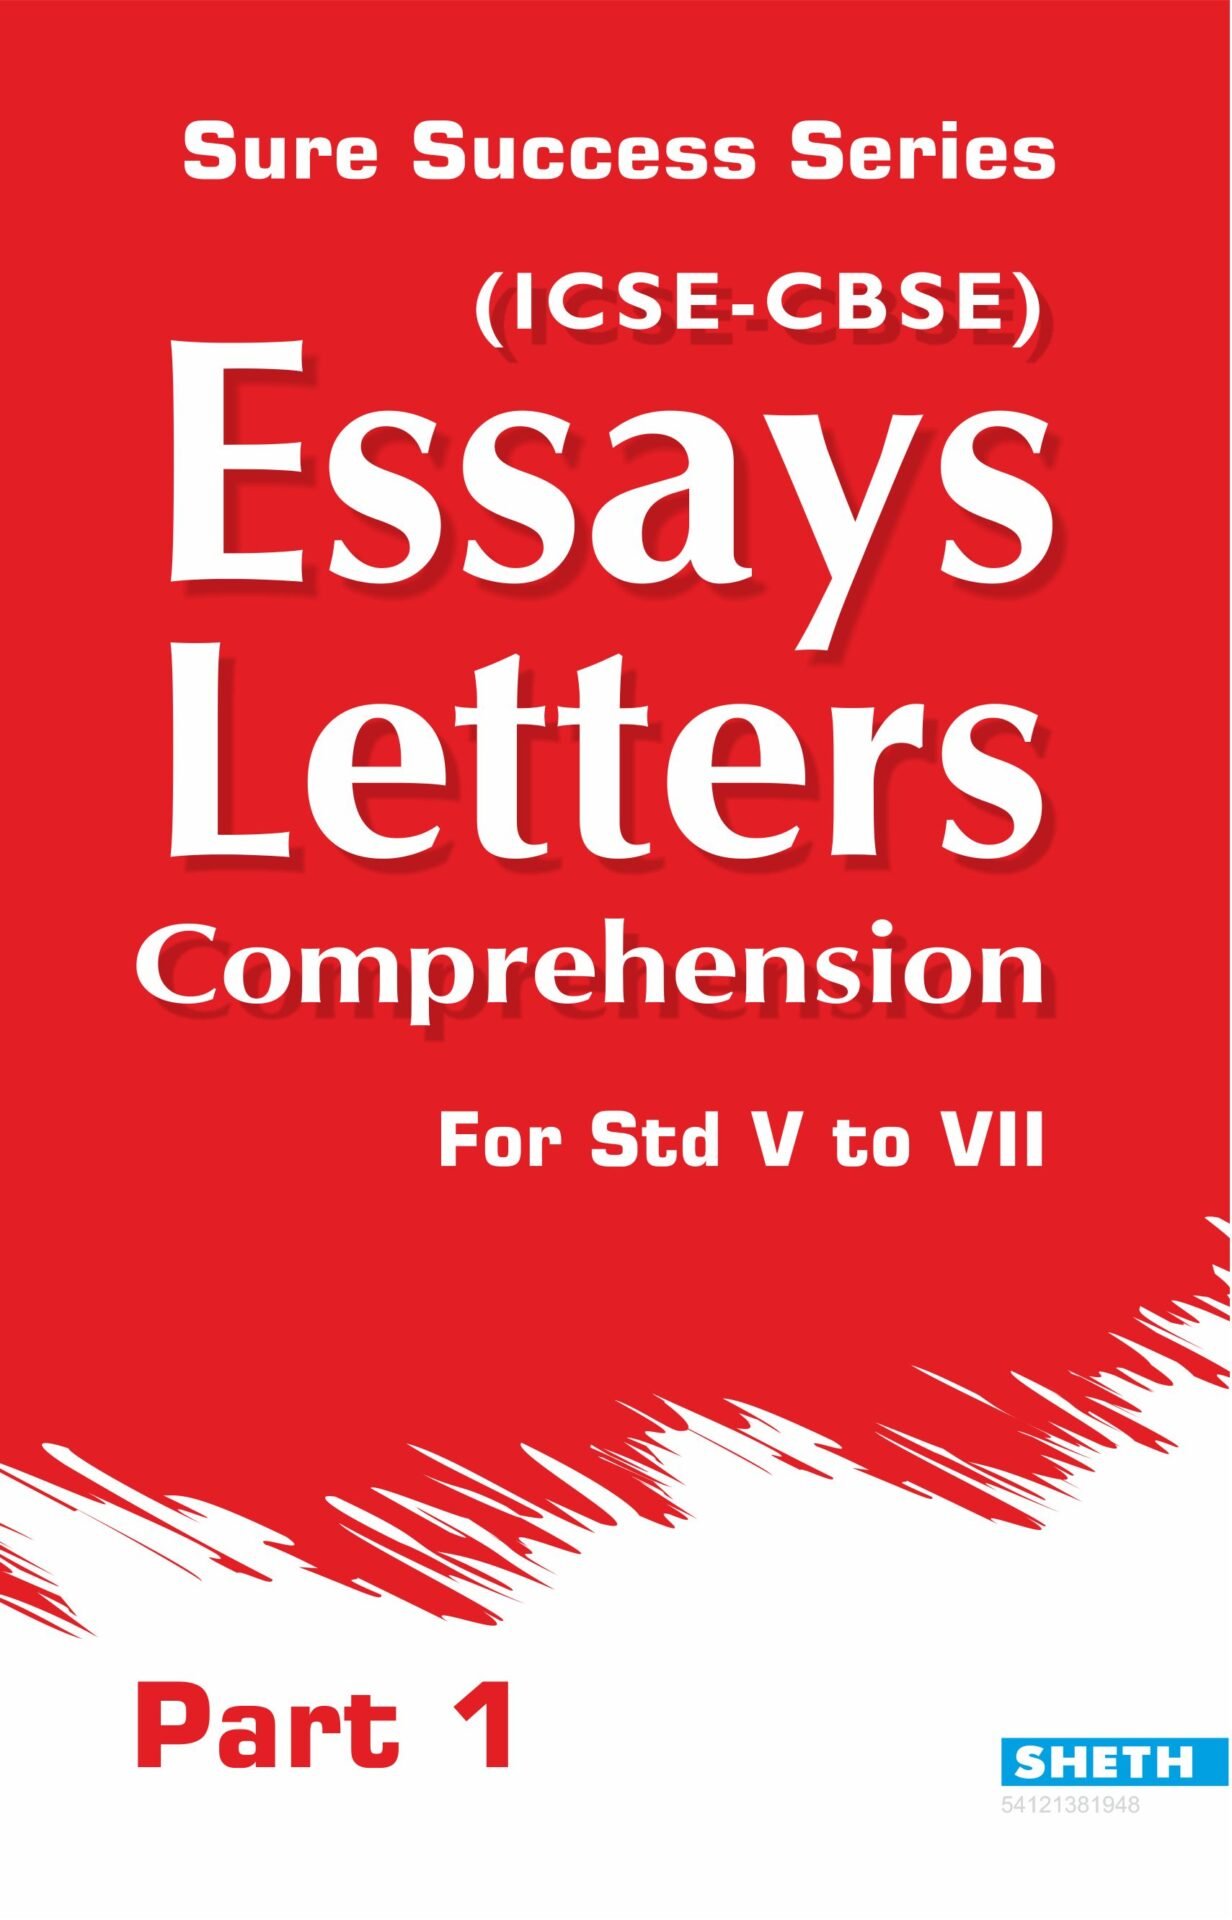 Sure Success Series Essays Letters Comprehension Part 1 for Std V to VII ICSE CBSE 1